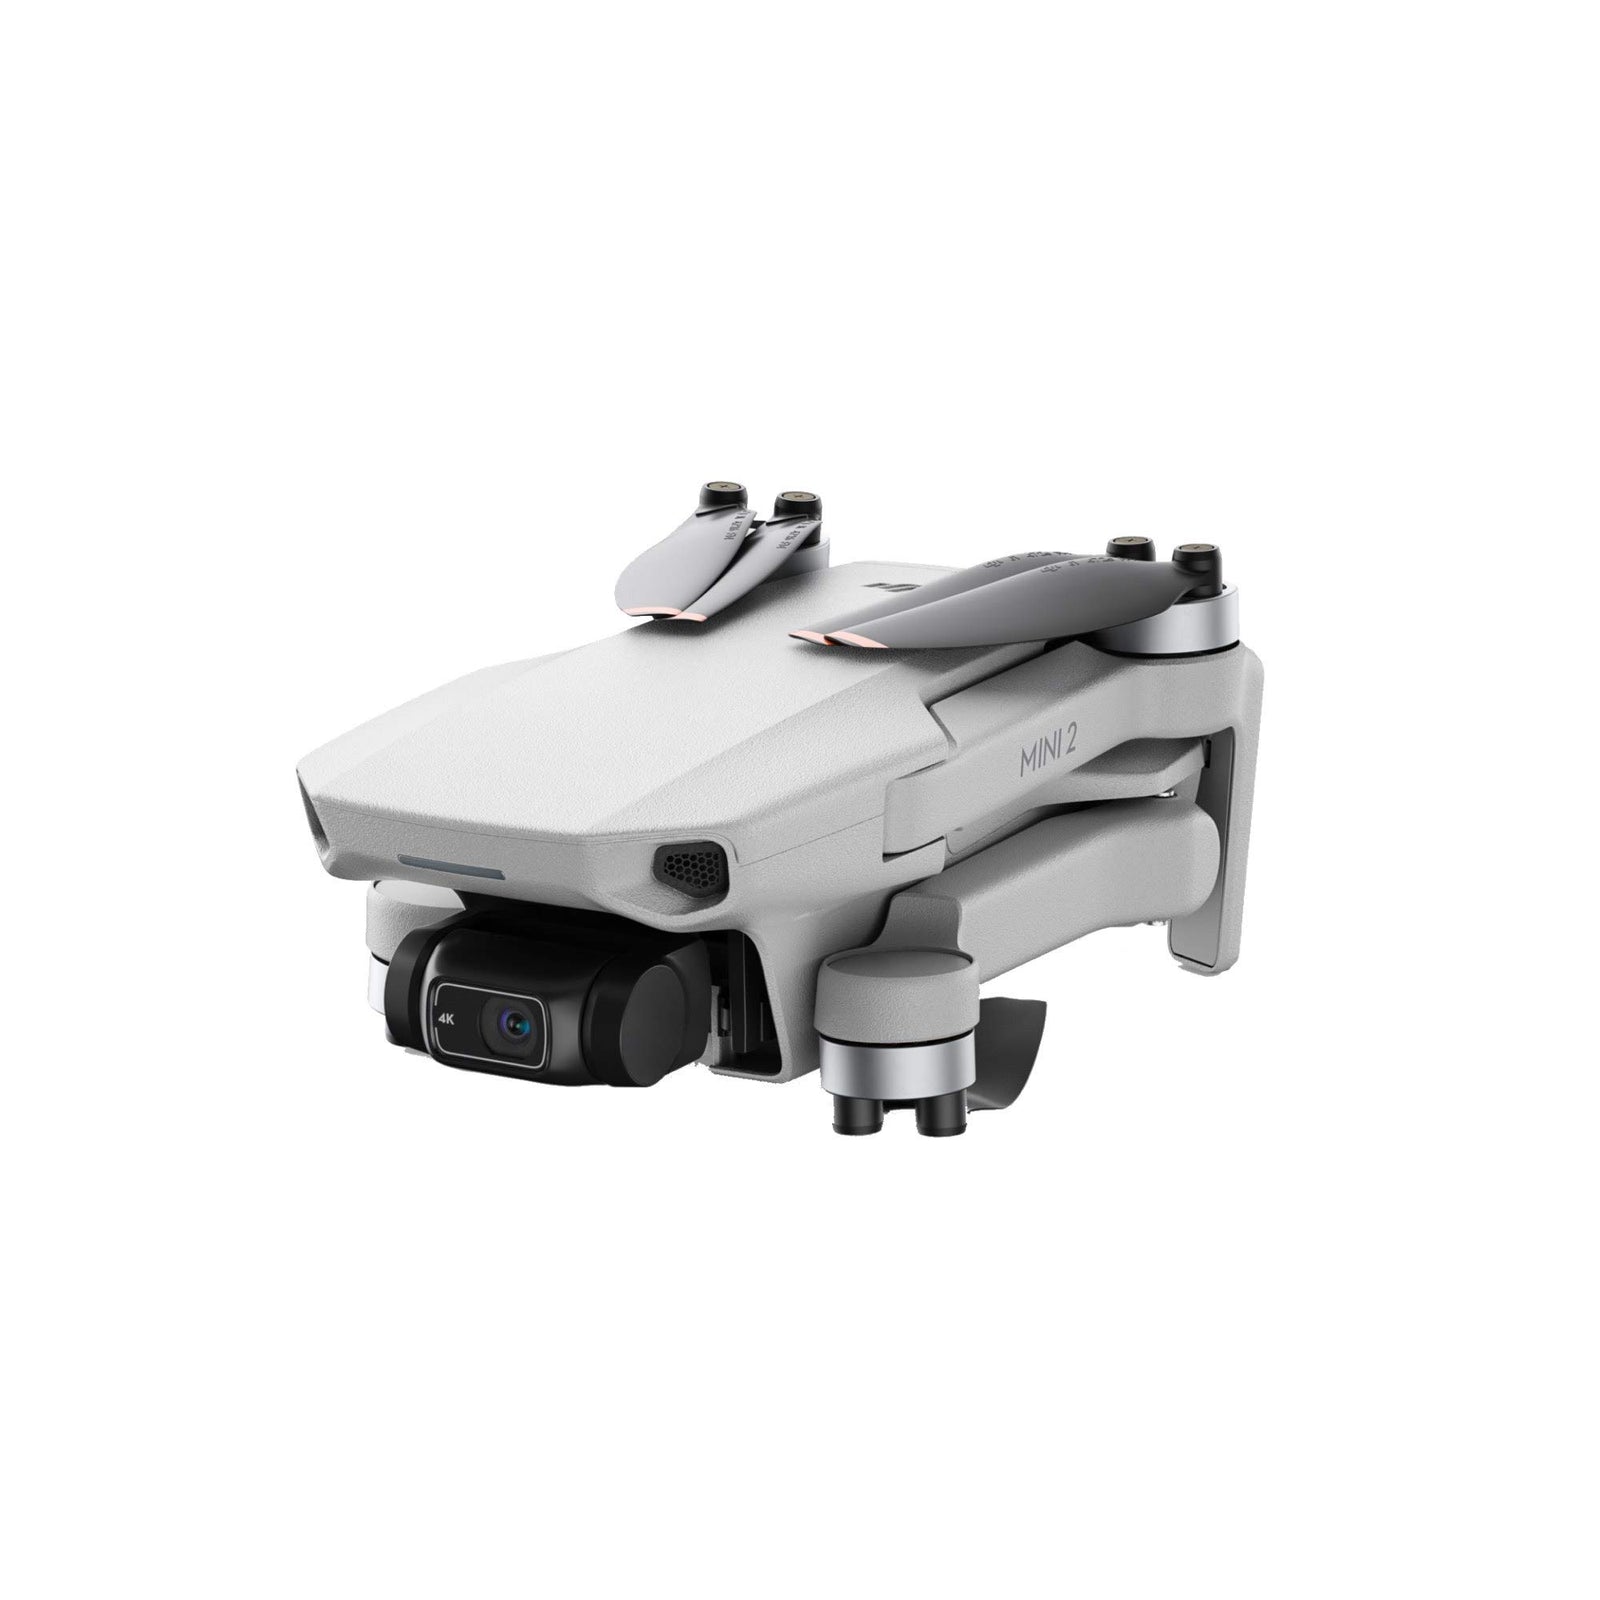 DJI Mini 2 Fly More Combo – Ultralight Foldable Drone, 3-Axis Gimbal with 4K Camera, 12MP Photos, 31 Mins Flight Time, OcuSync 2.0 10km HD Video Transmission, QuickShots, Gray